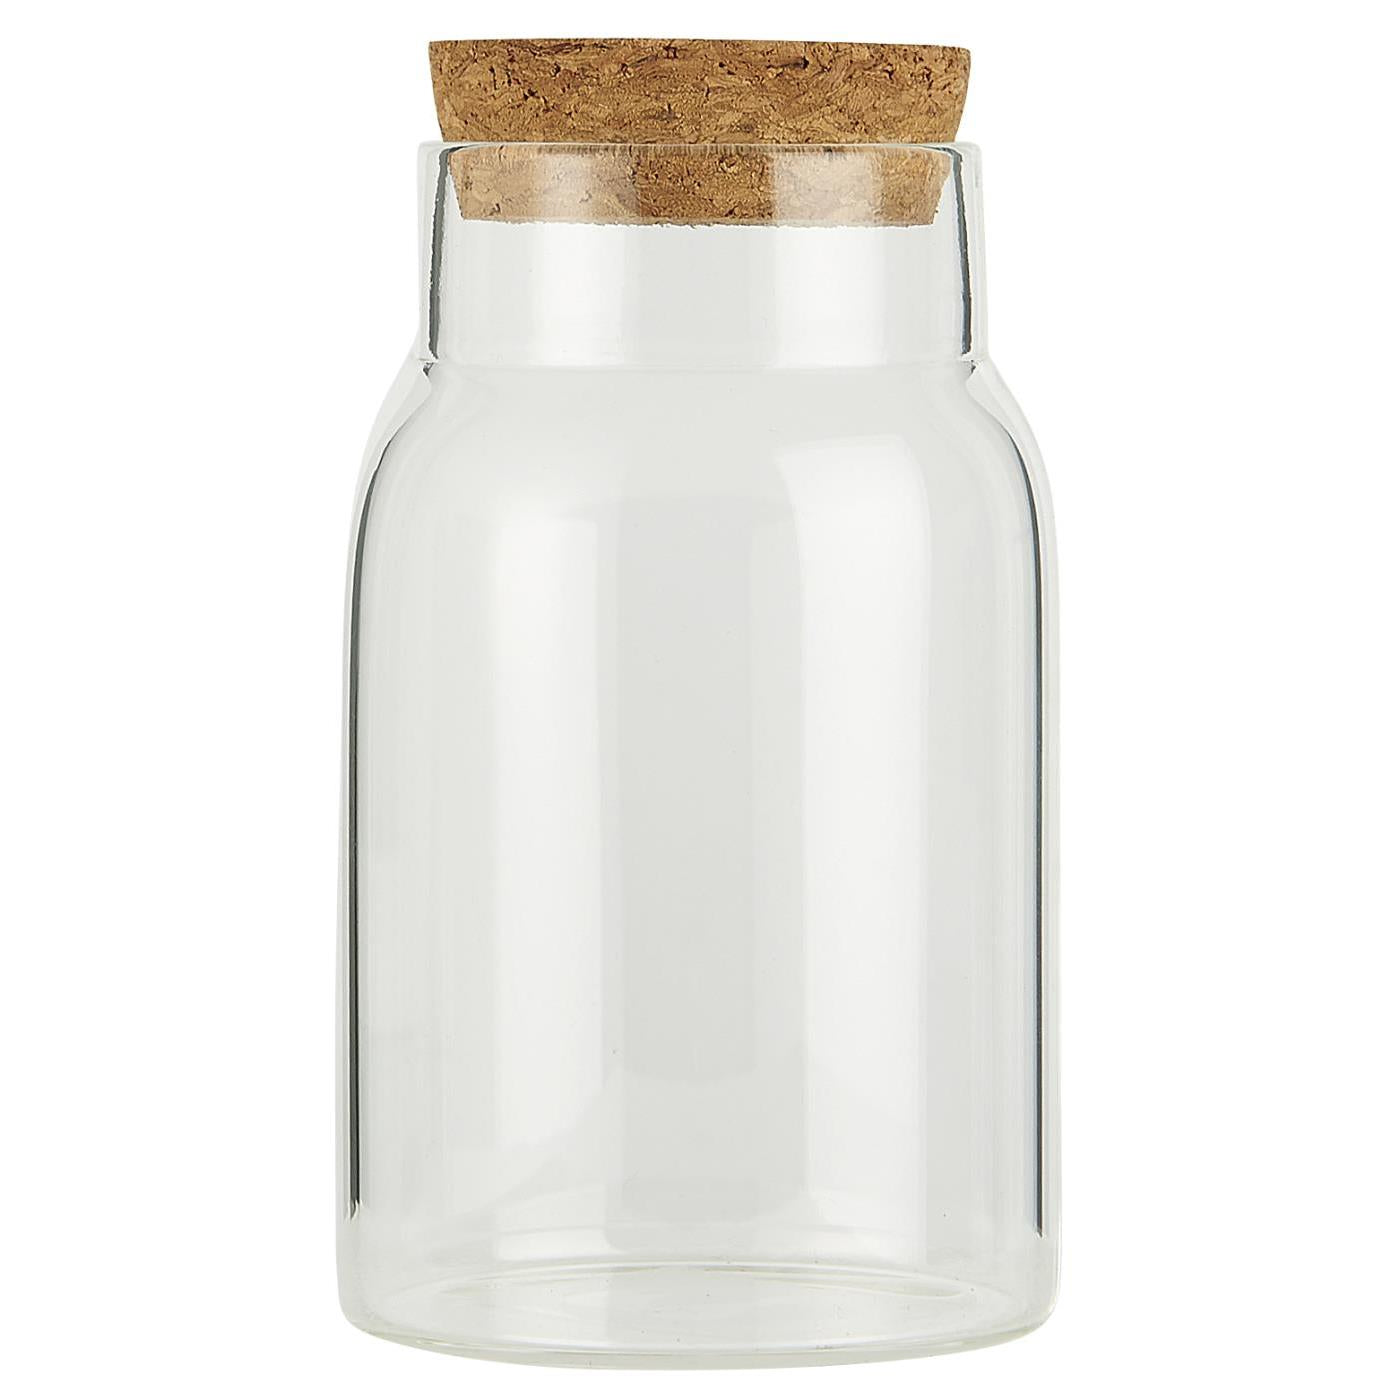 Glass jar with cork lid